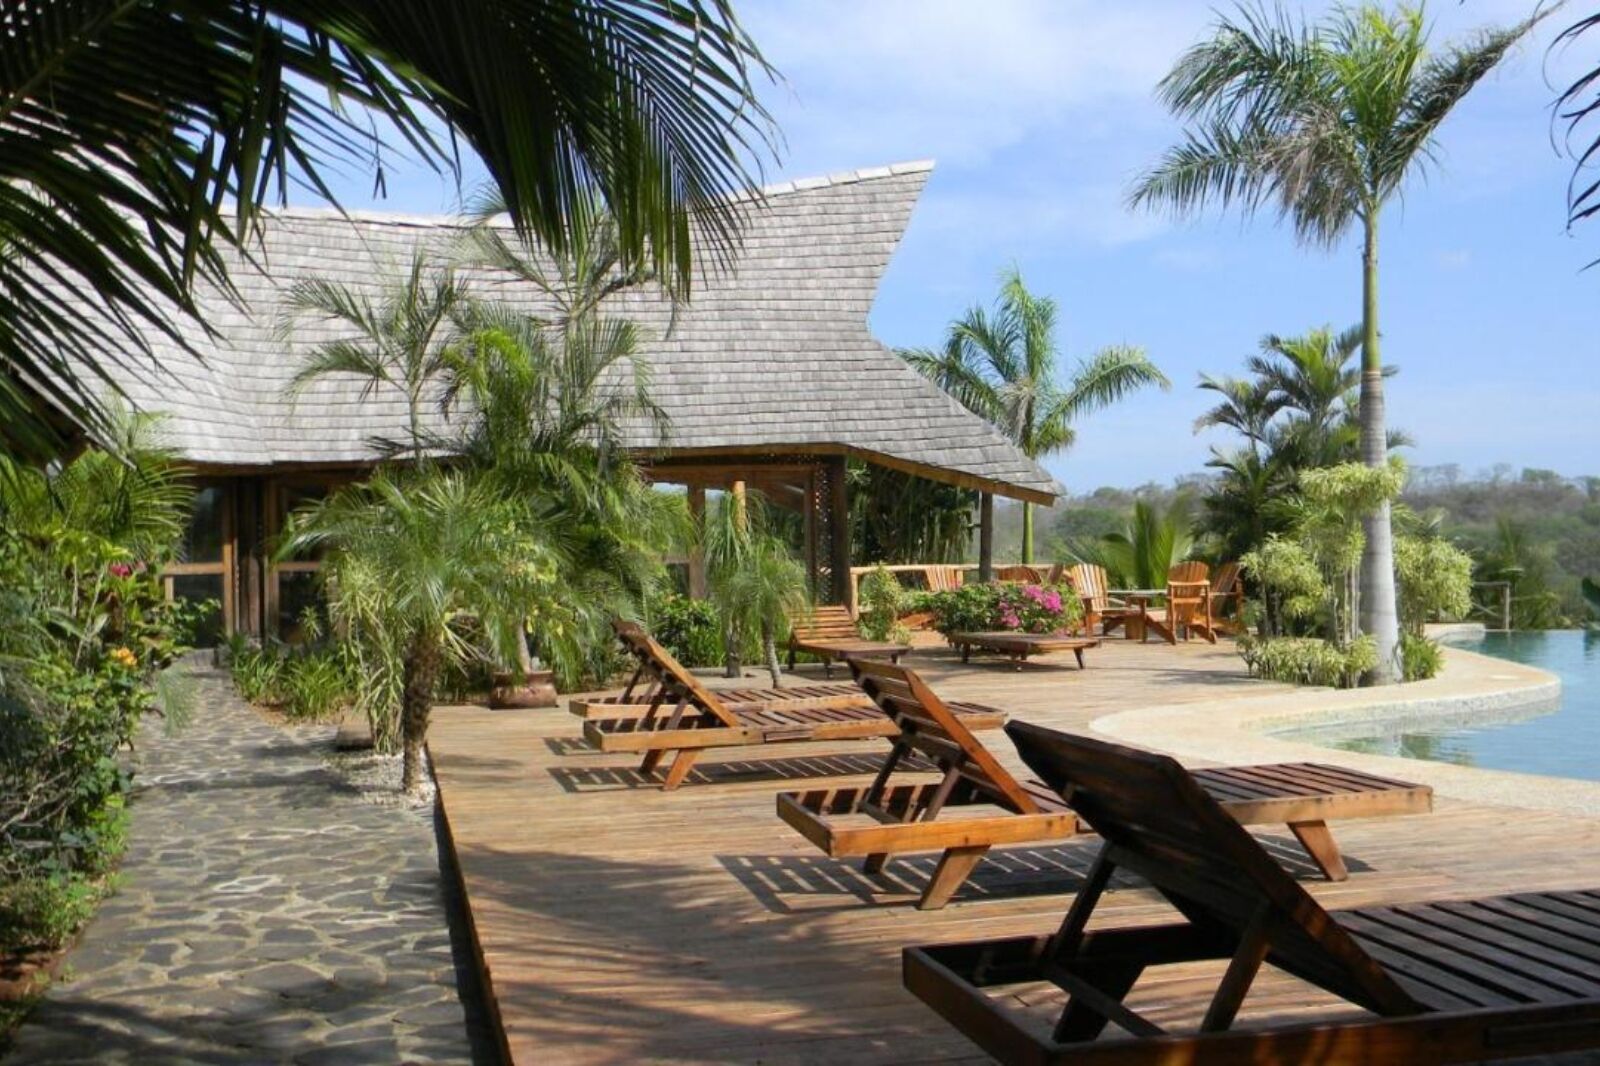 El Sabanero Eco Lodge pool one of the best Costa Rica yoga retreats